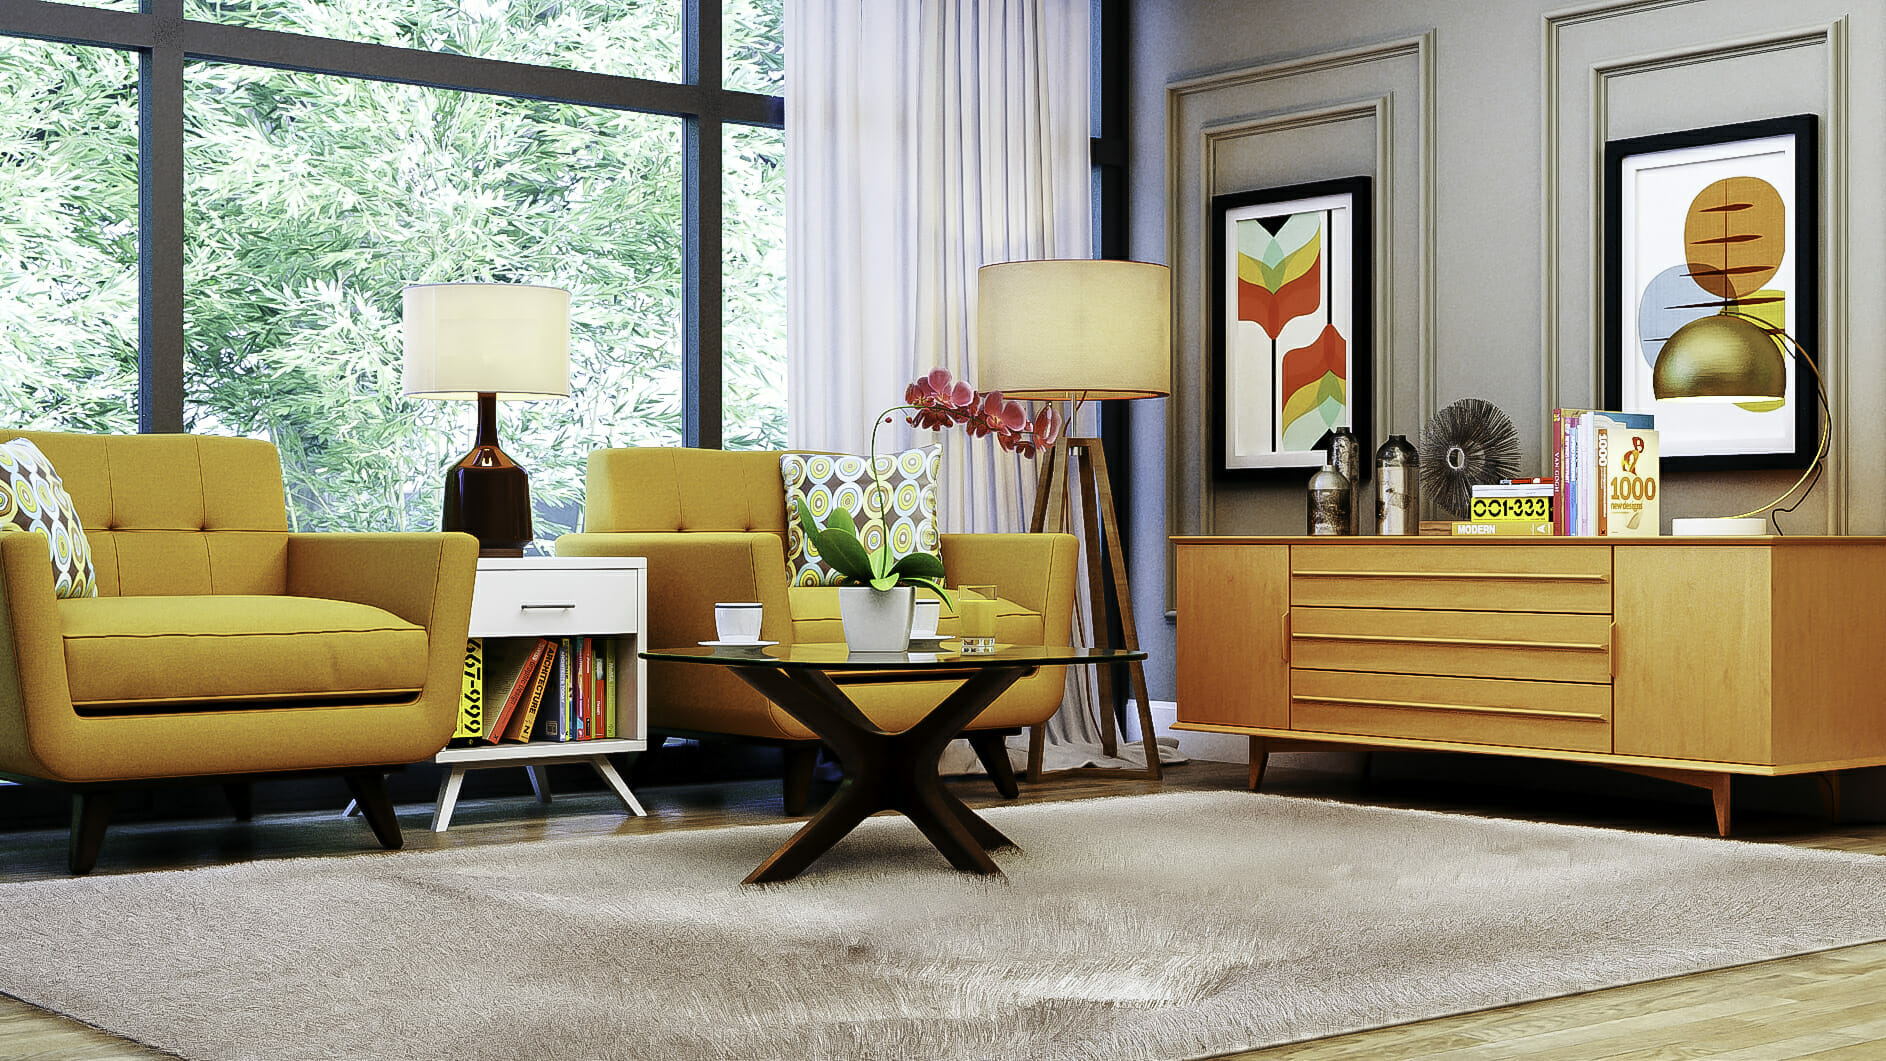 Colorful mid-century modern living area by top New Jersey interior designer Aldrin Cruz